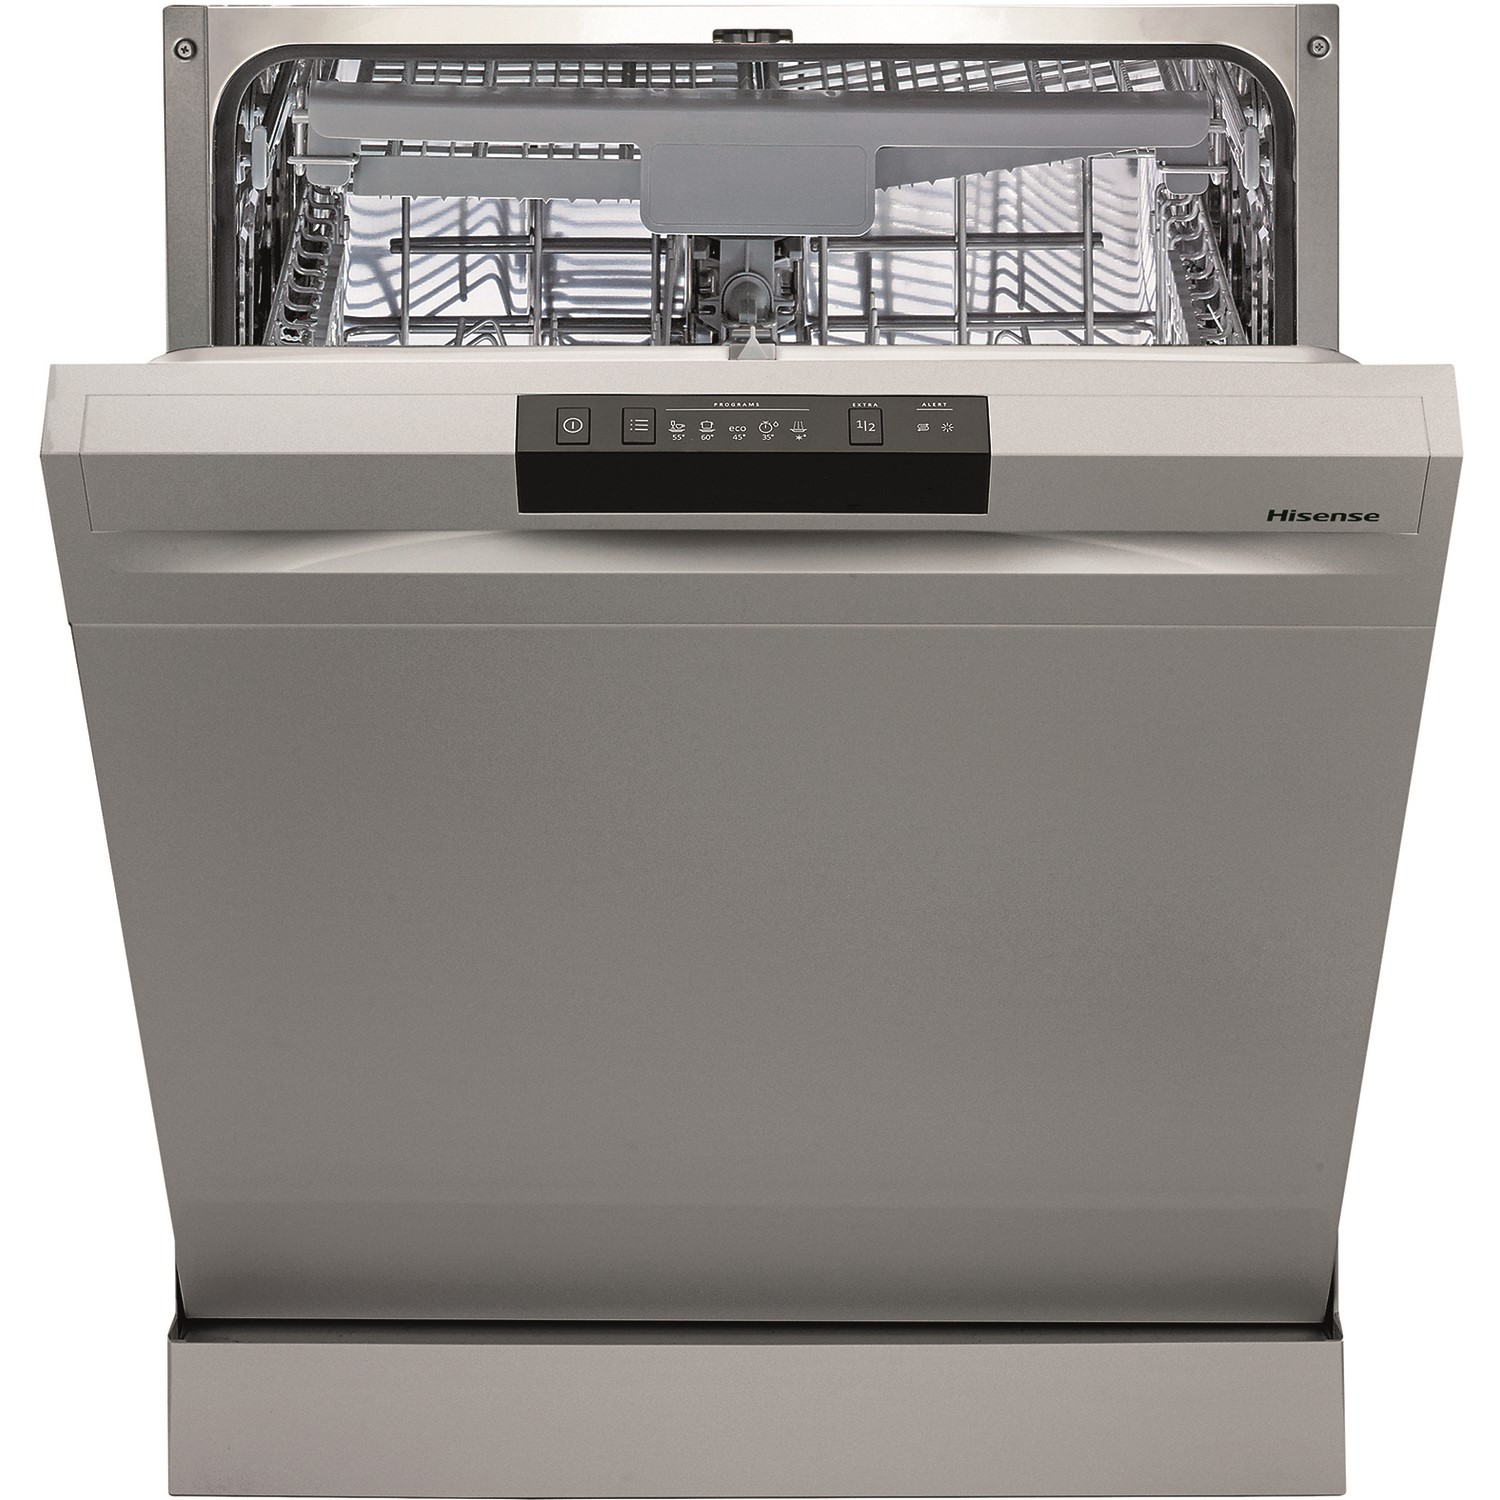 Hisense 14 Place Settings Freestanding Dishwasher - Silver